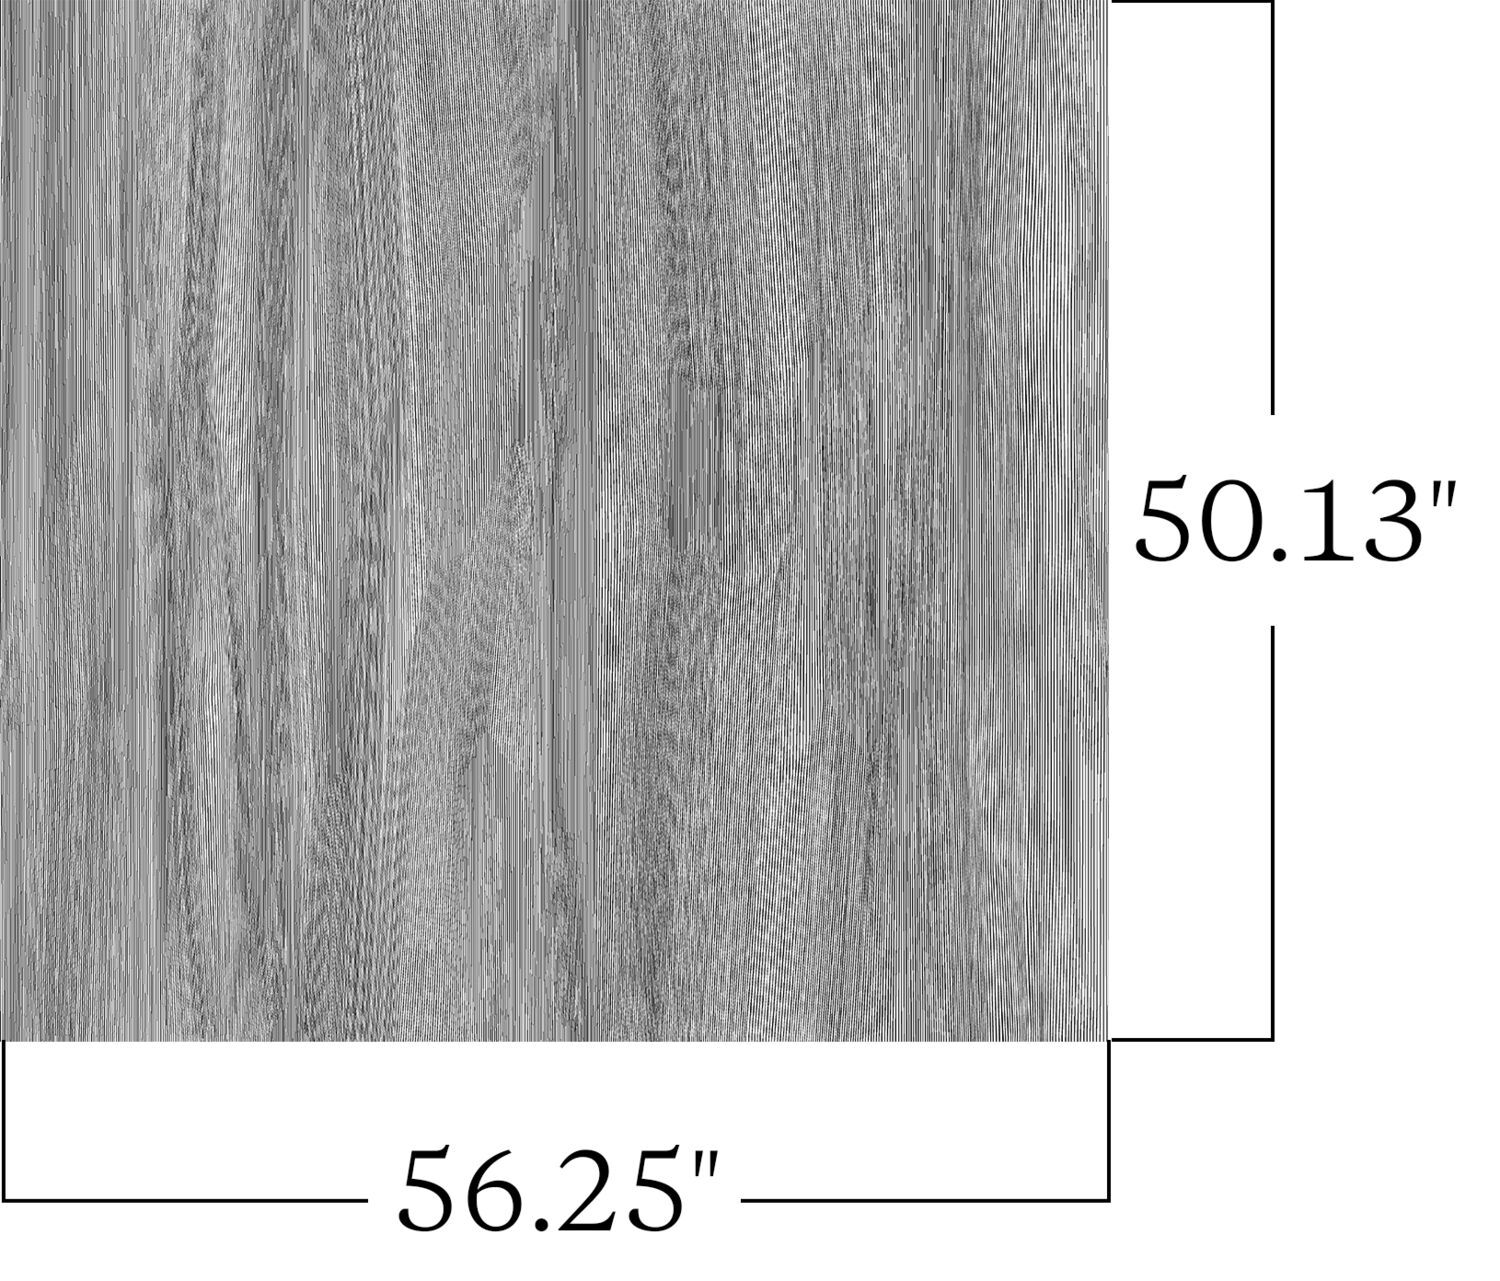 Juxtapose - Timber - 7020 - 04 Pattern Repeat Image